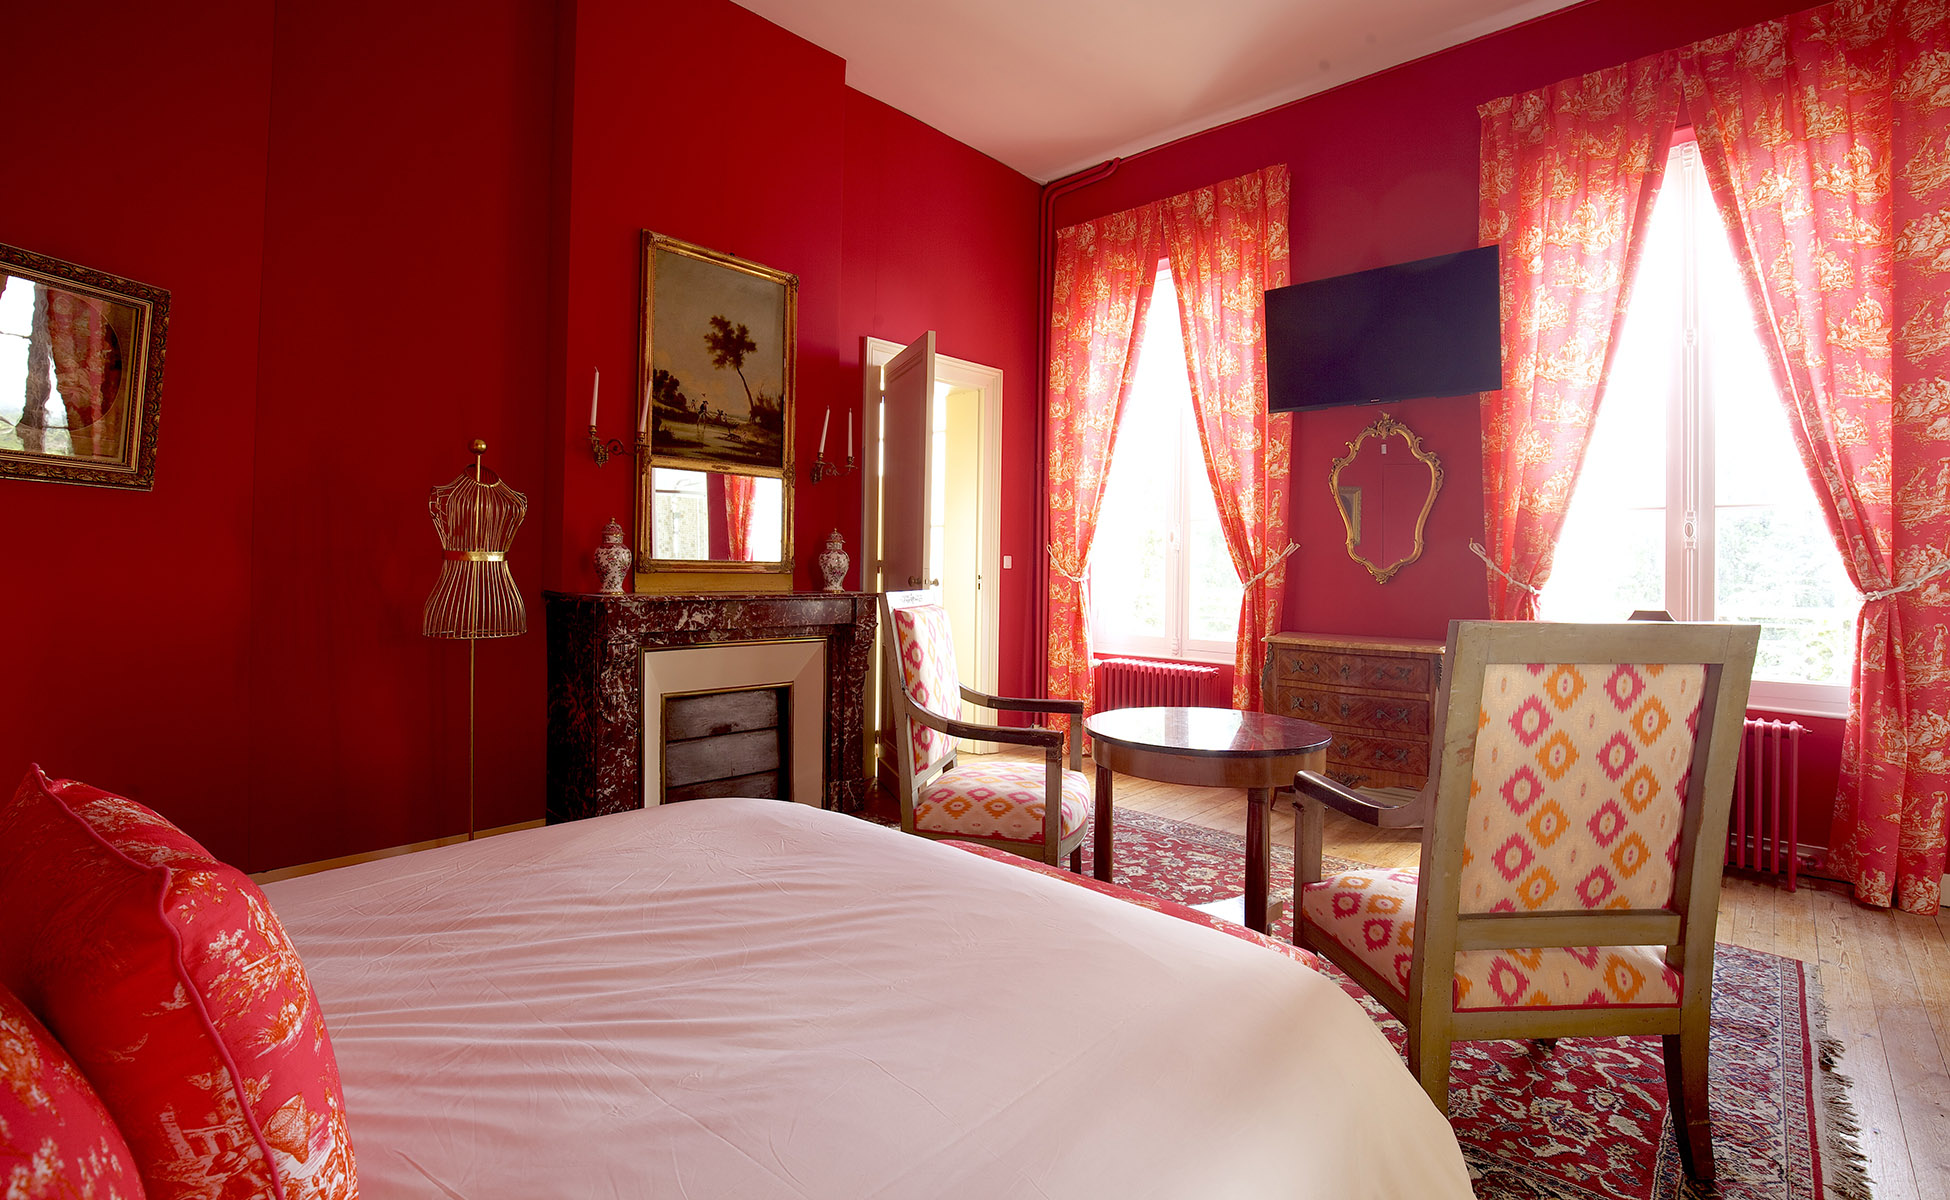 Lovelydays luxury service apartment rental - Libourne - Chateau de JUNAYME - Lovelysuite - 7 bedrooms - 6 bathrooms - King bed - cf5ee8be63e6 - Lovelydays